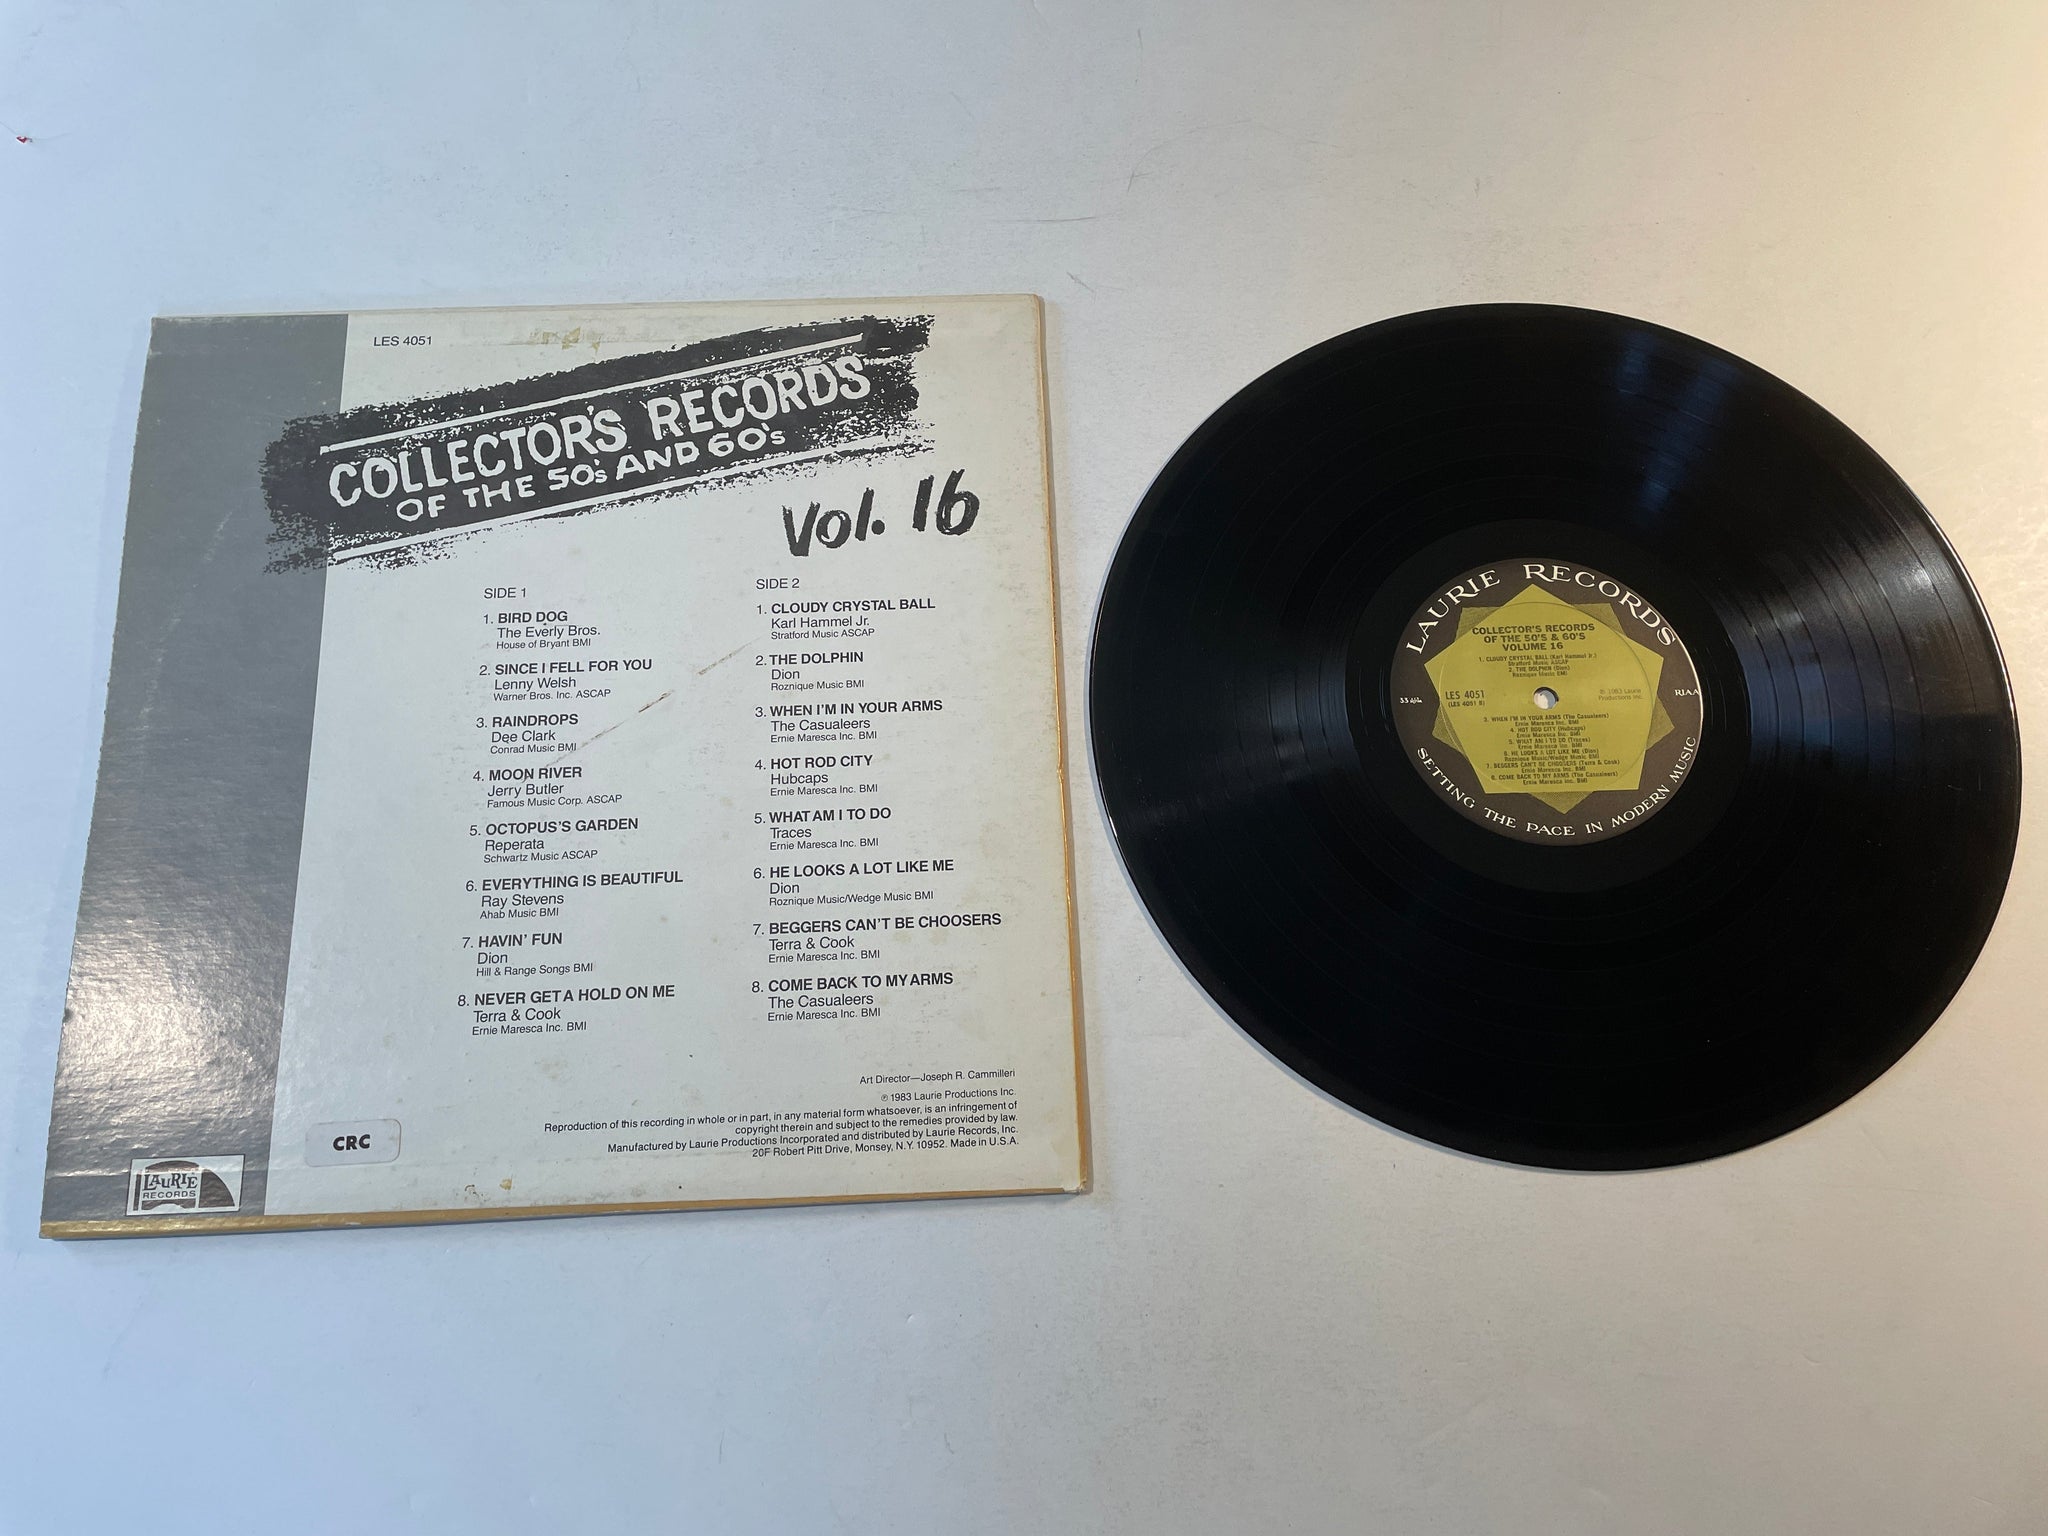  The Vinyl Collection, Vol. 1: CDs & Vinyl